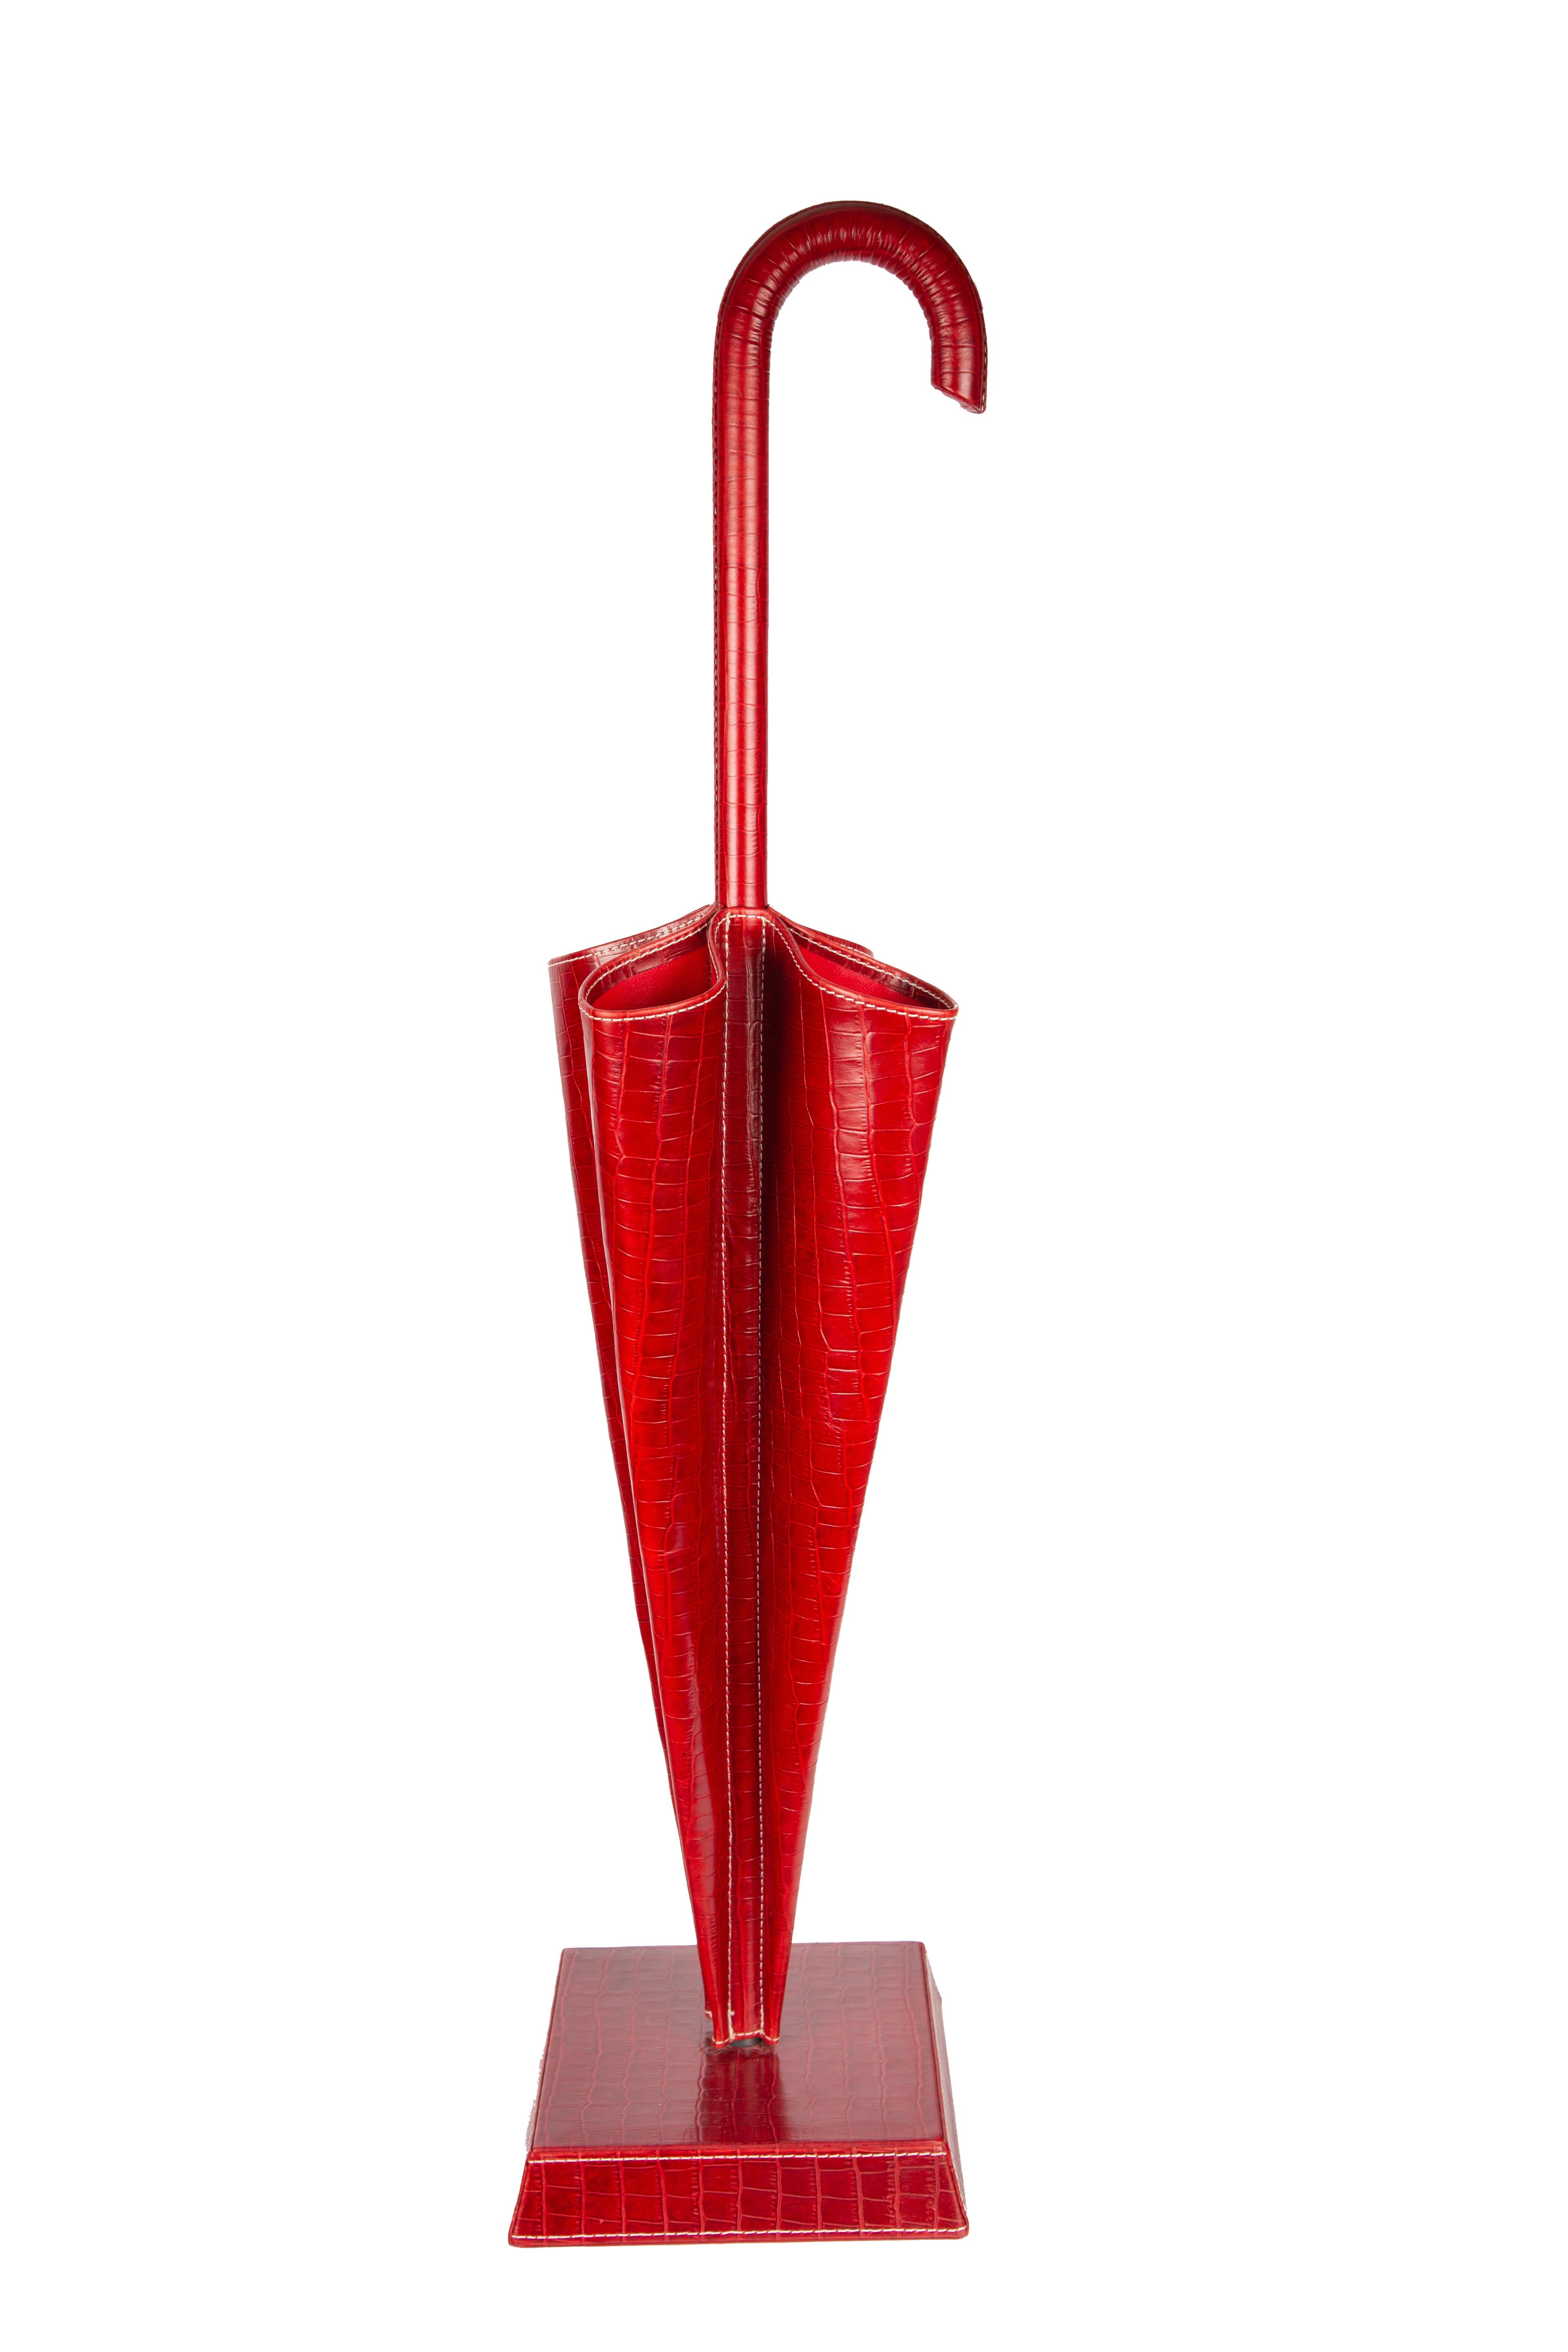 Vig Bergdorf Goodman embossed Croc leather umbrella stand:

Measures: 8